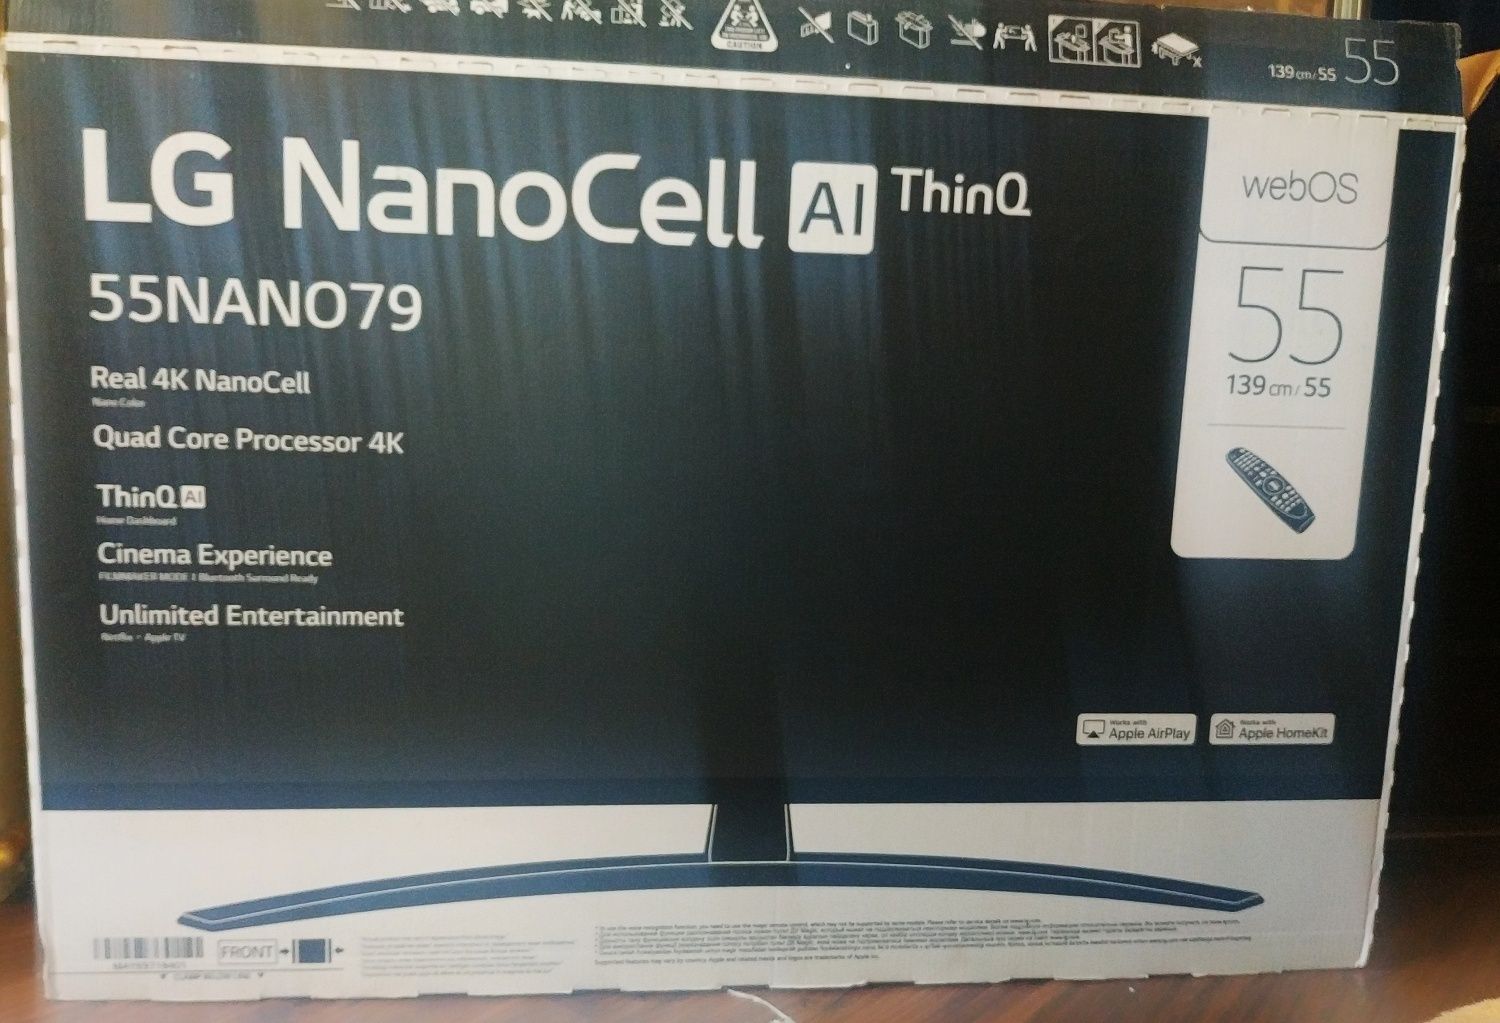 LG NanoCell 4K ULTRA HD  Телевизор LG 55NANO796NF

NanoCell т